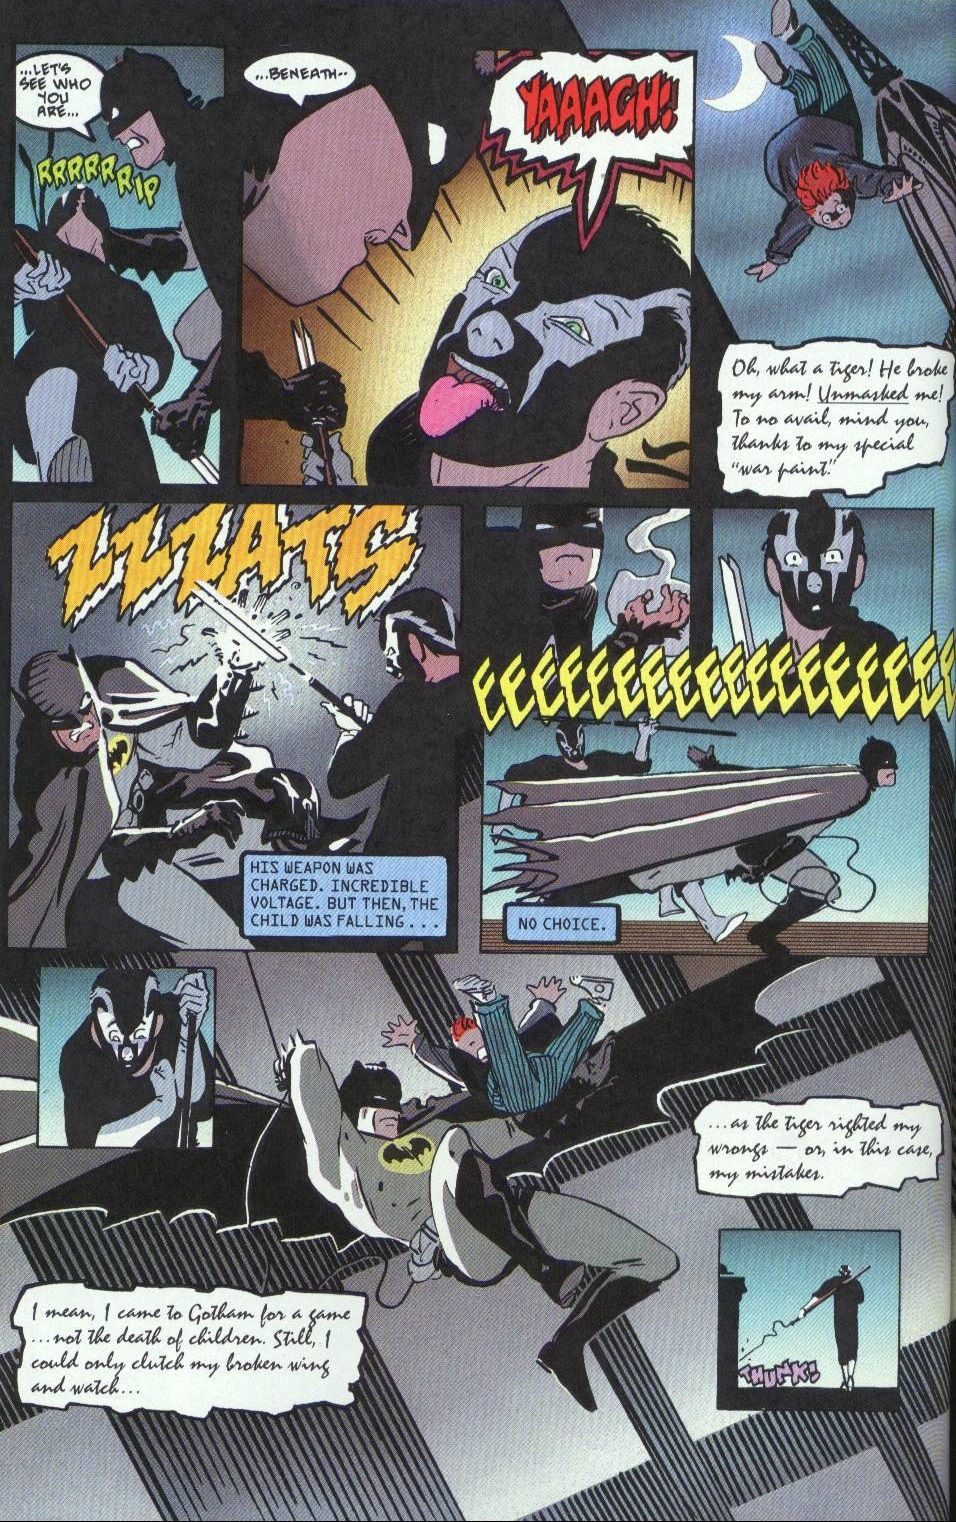 Batman fighting Grendel